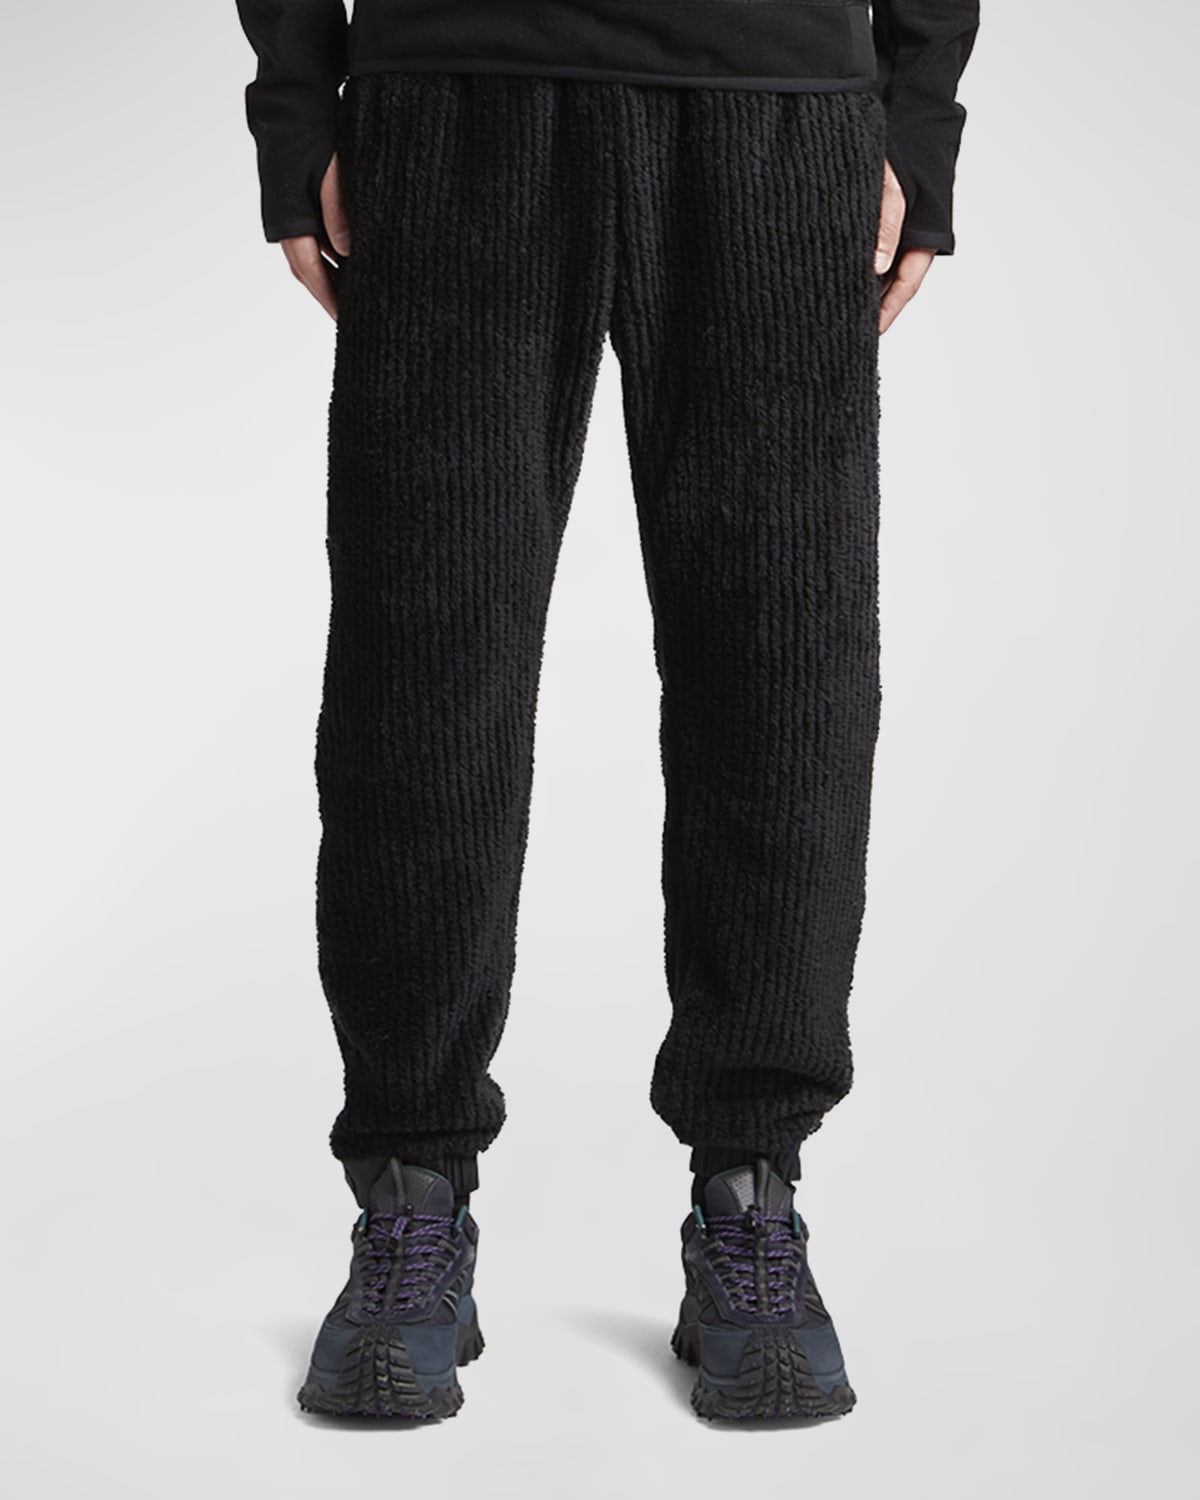 Dolce&Gabbana Men's Vegan Leather Jogger Pants | Neiman Marcus